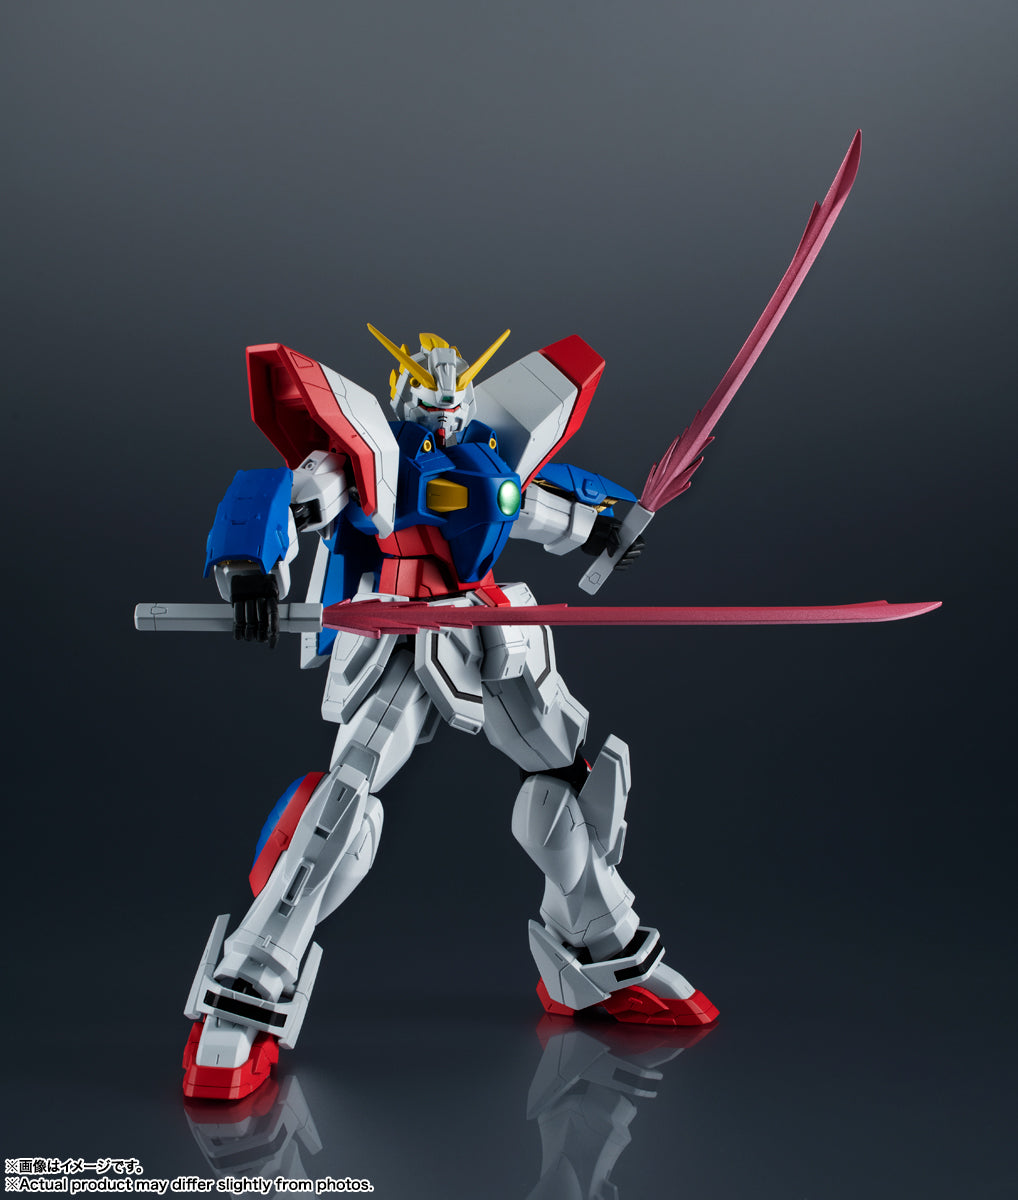 Bandai Spirits Mobile Suit Gundam - Gundam Universe GF13-017 NJ SHINING GUNDAM Action Figure